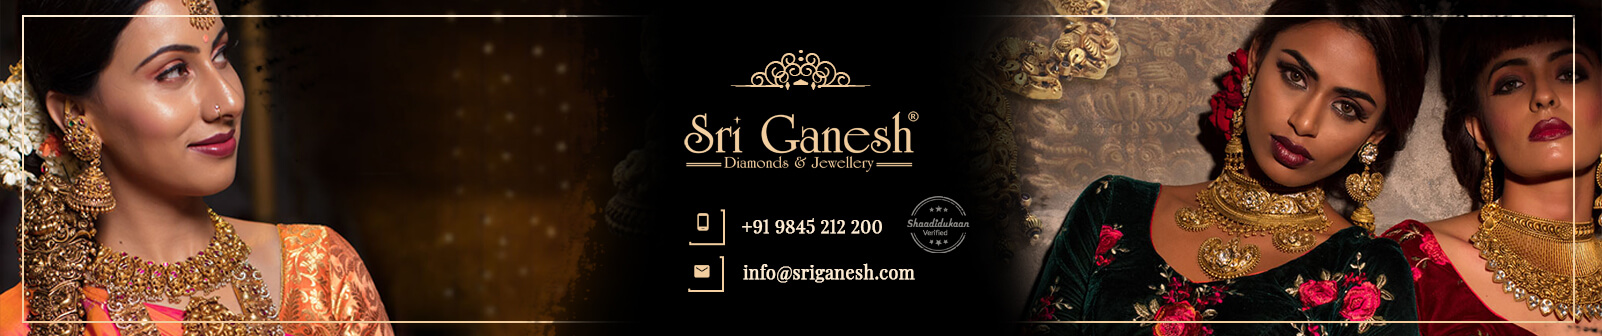 Sri Ganesh Diamond and Jewellery